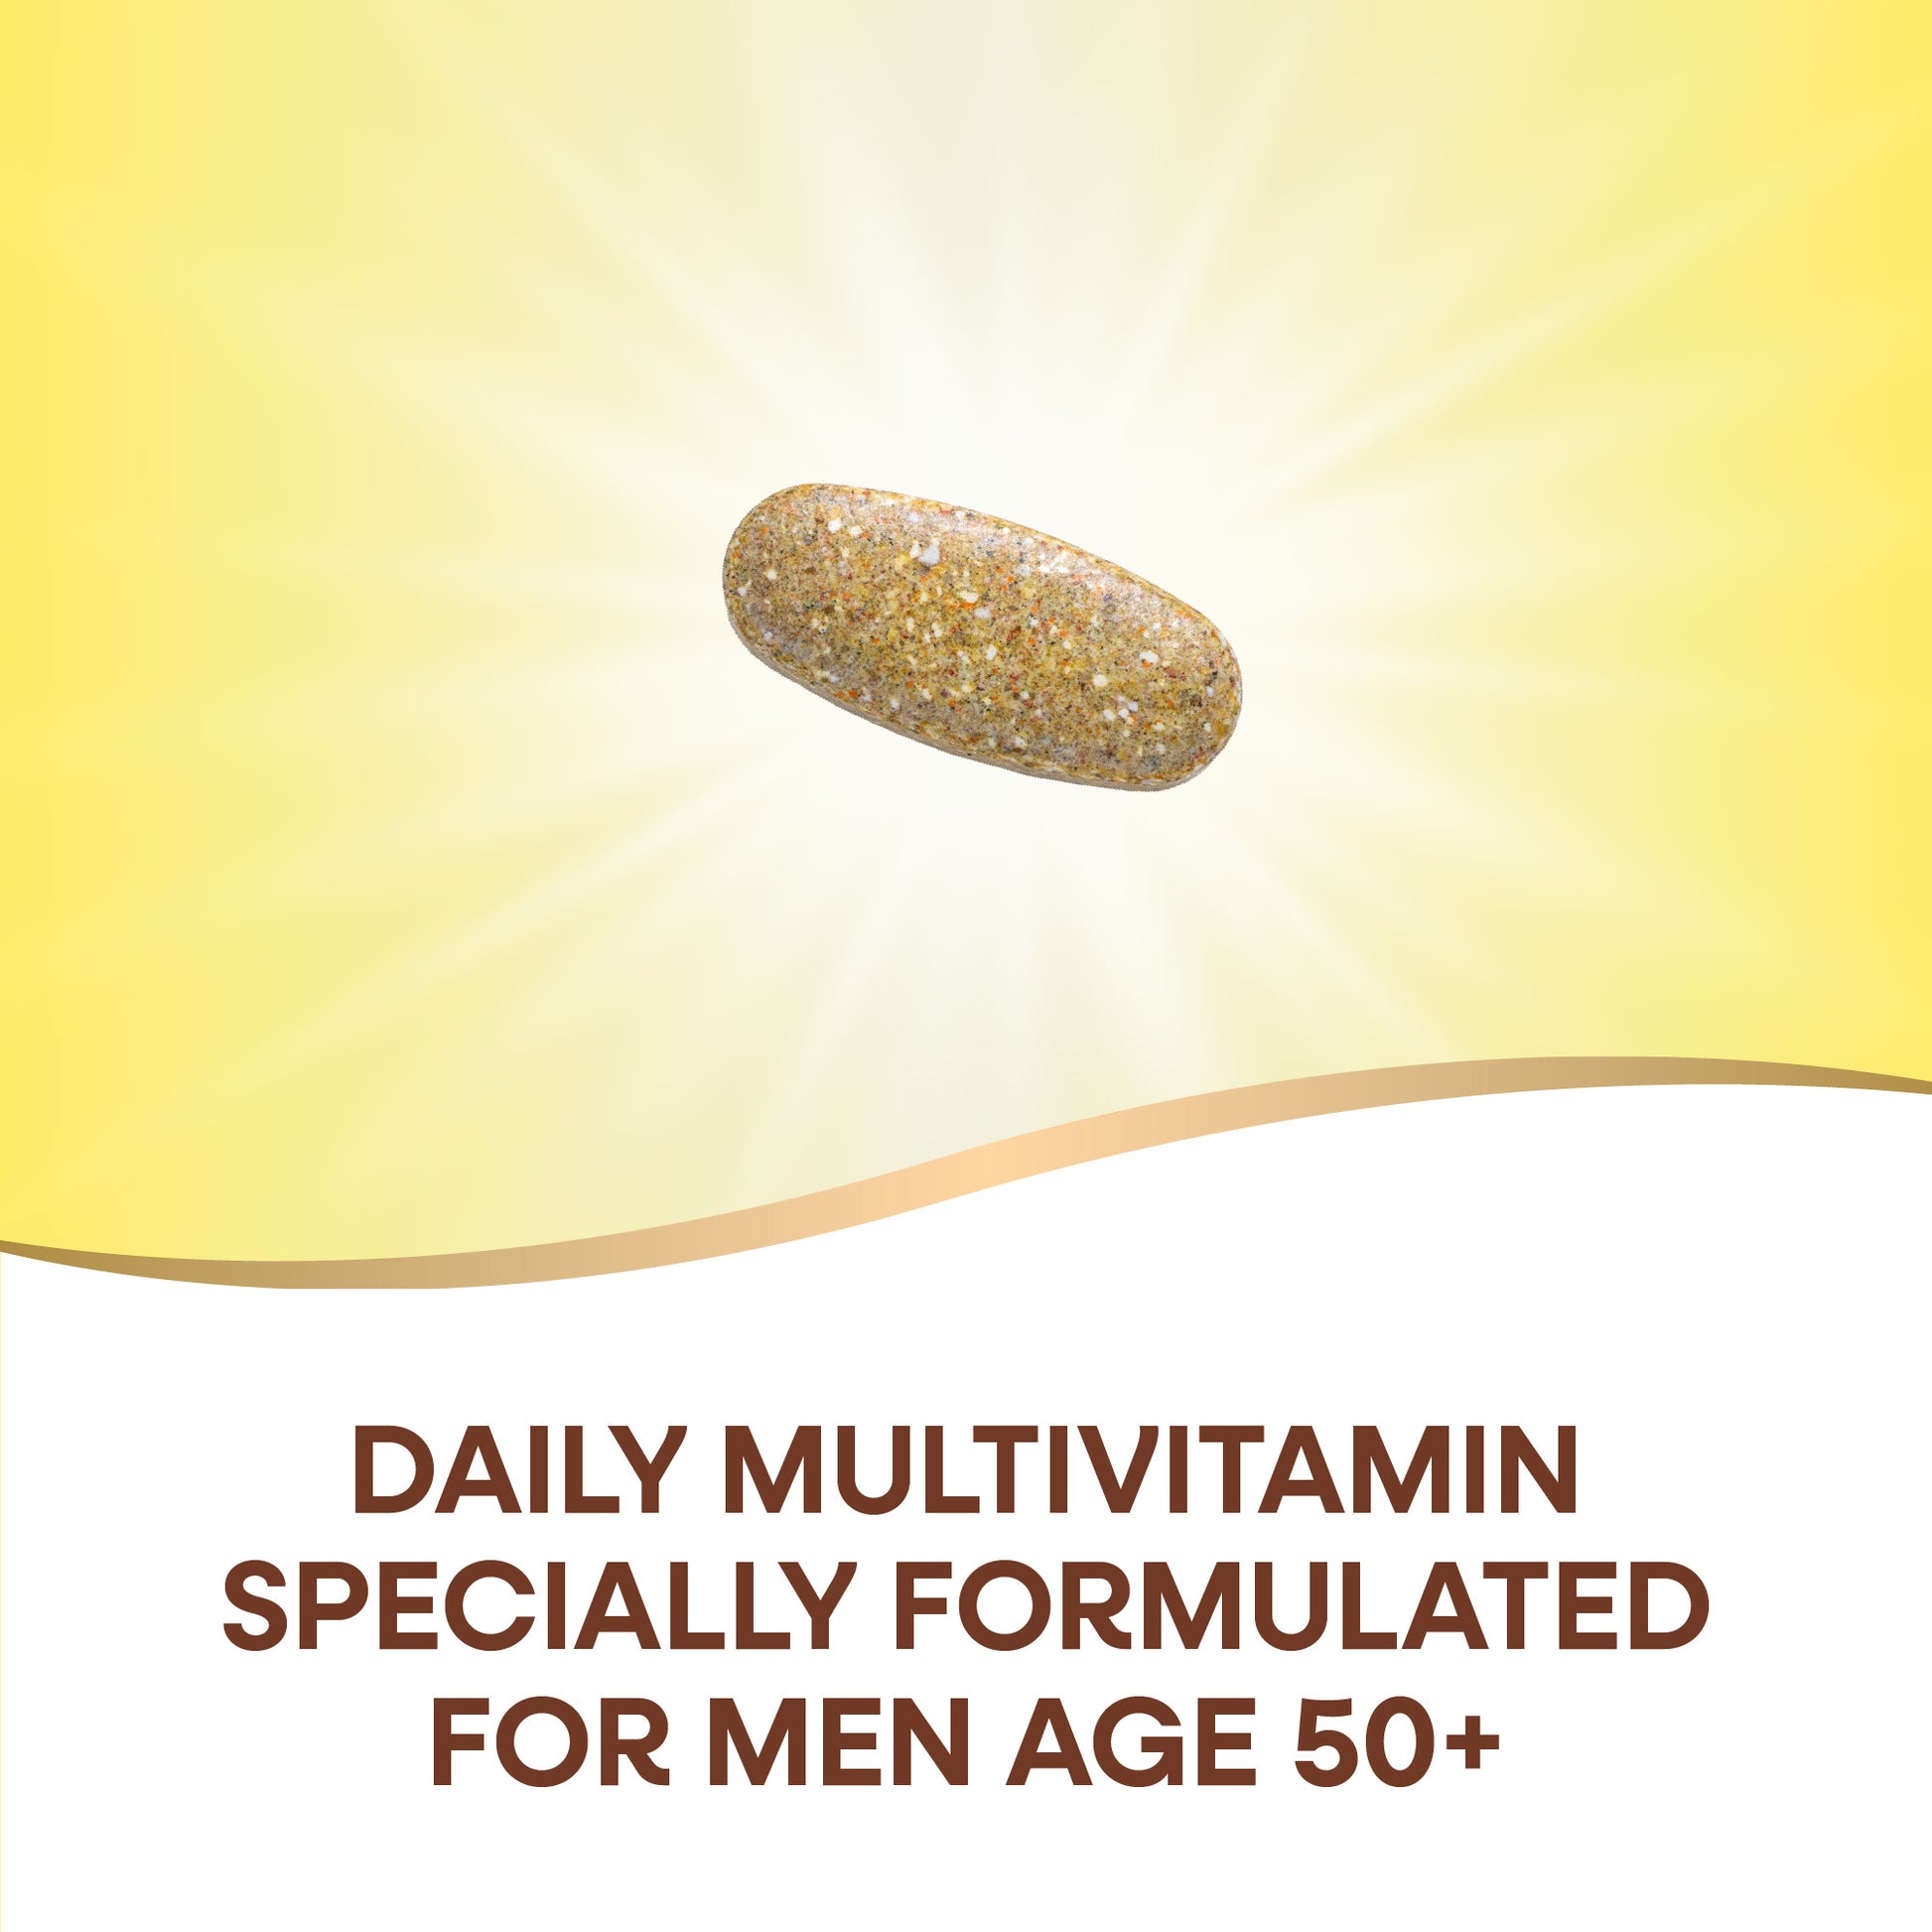 Nature's Way® | Alive!® Men's 50+ Ultra Multivitamin